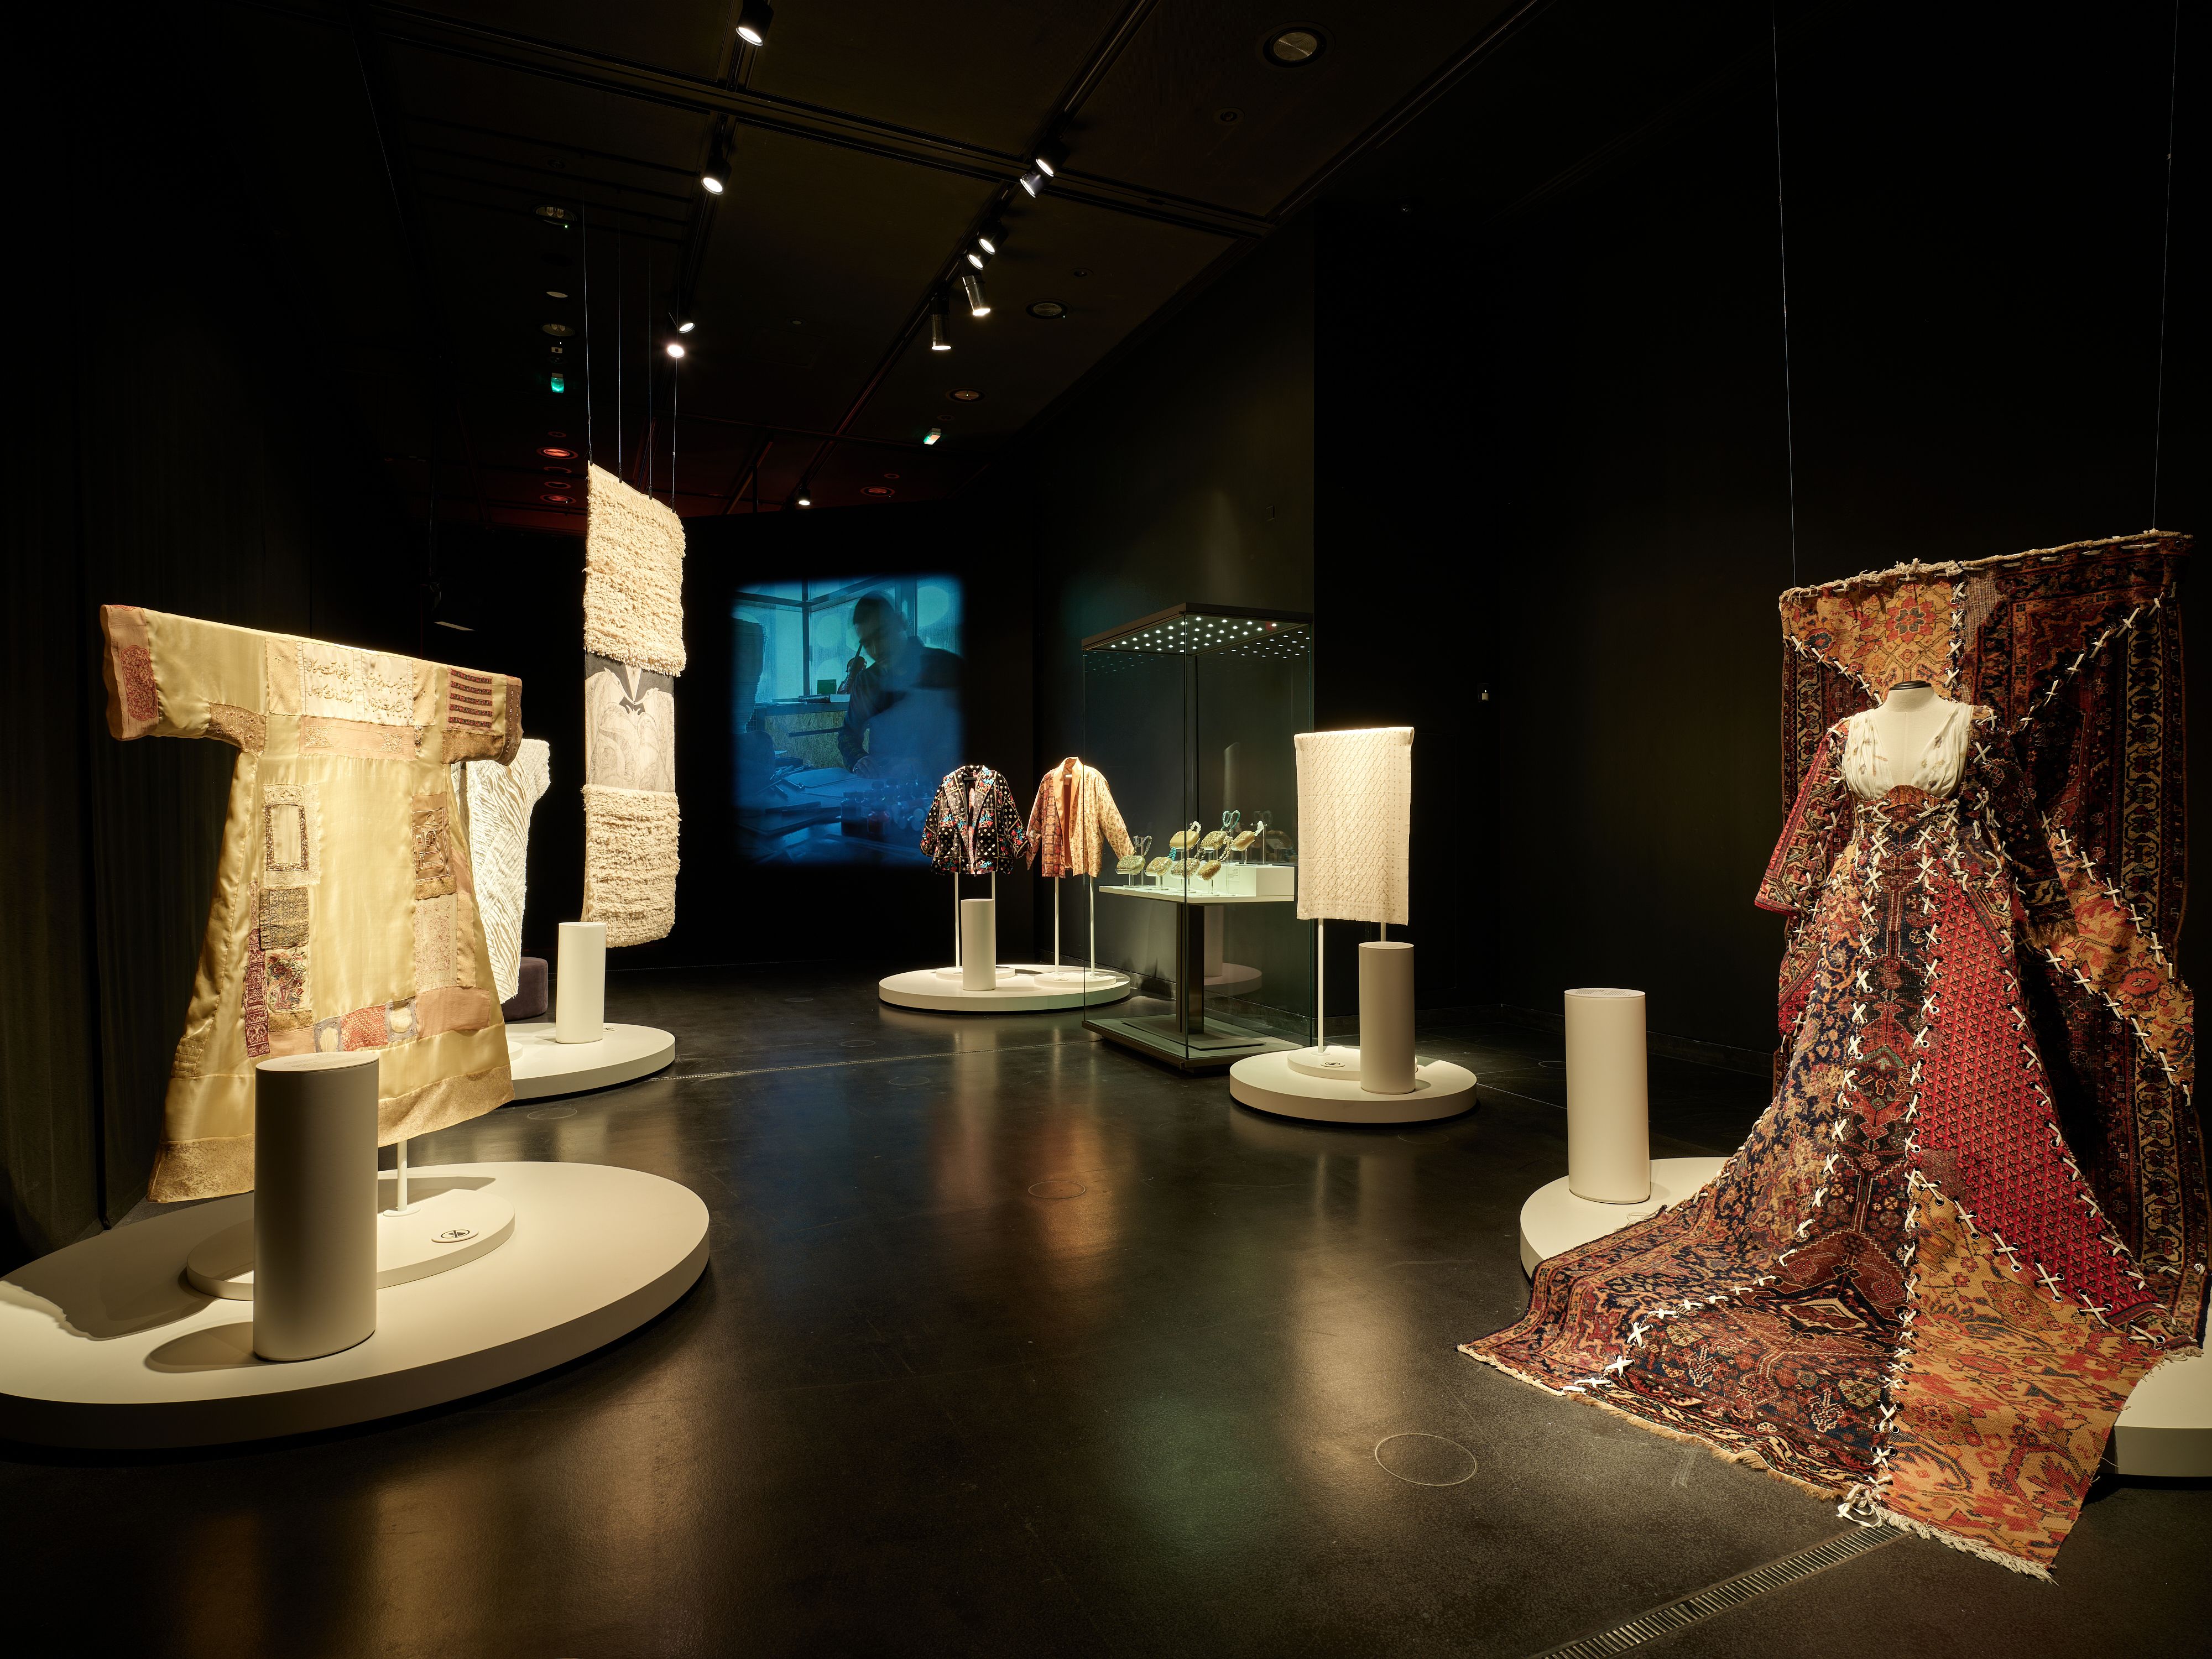 Fashioning an Empire: Textiles from Safavid Iran